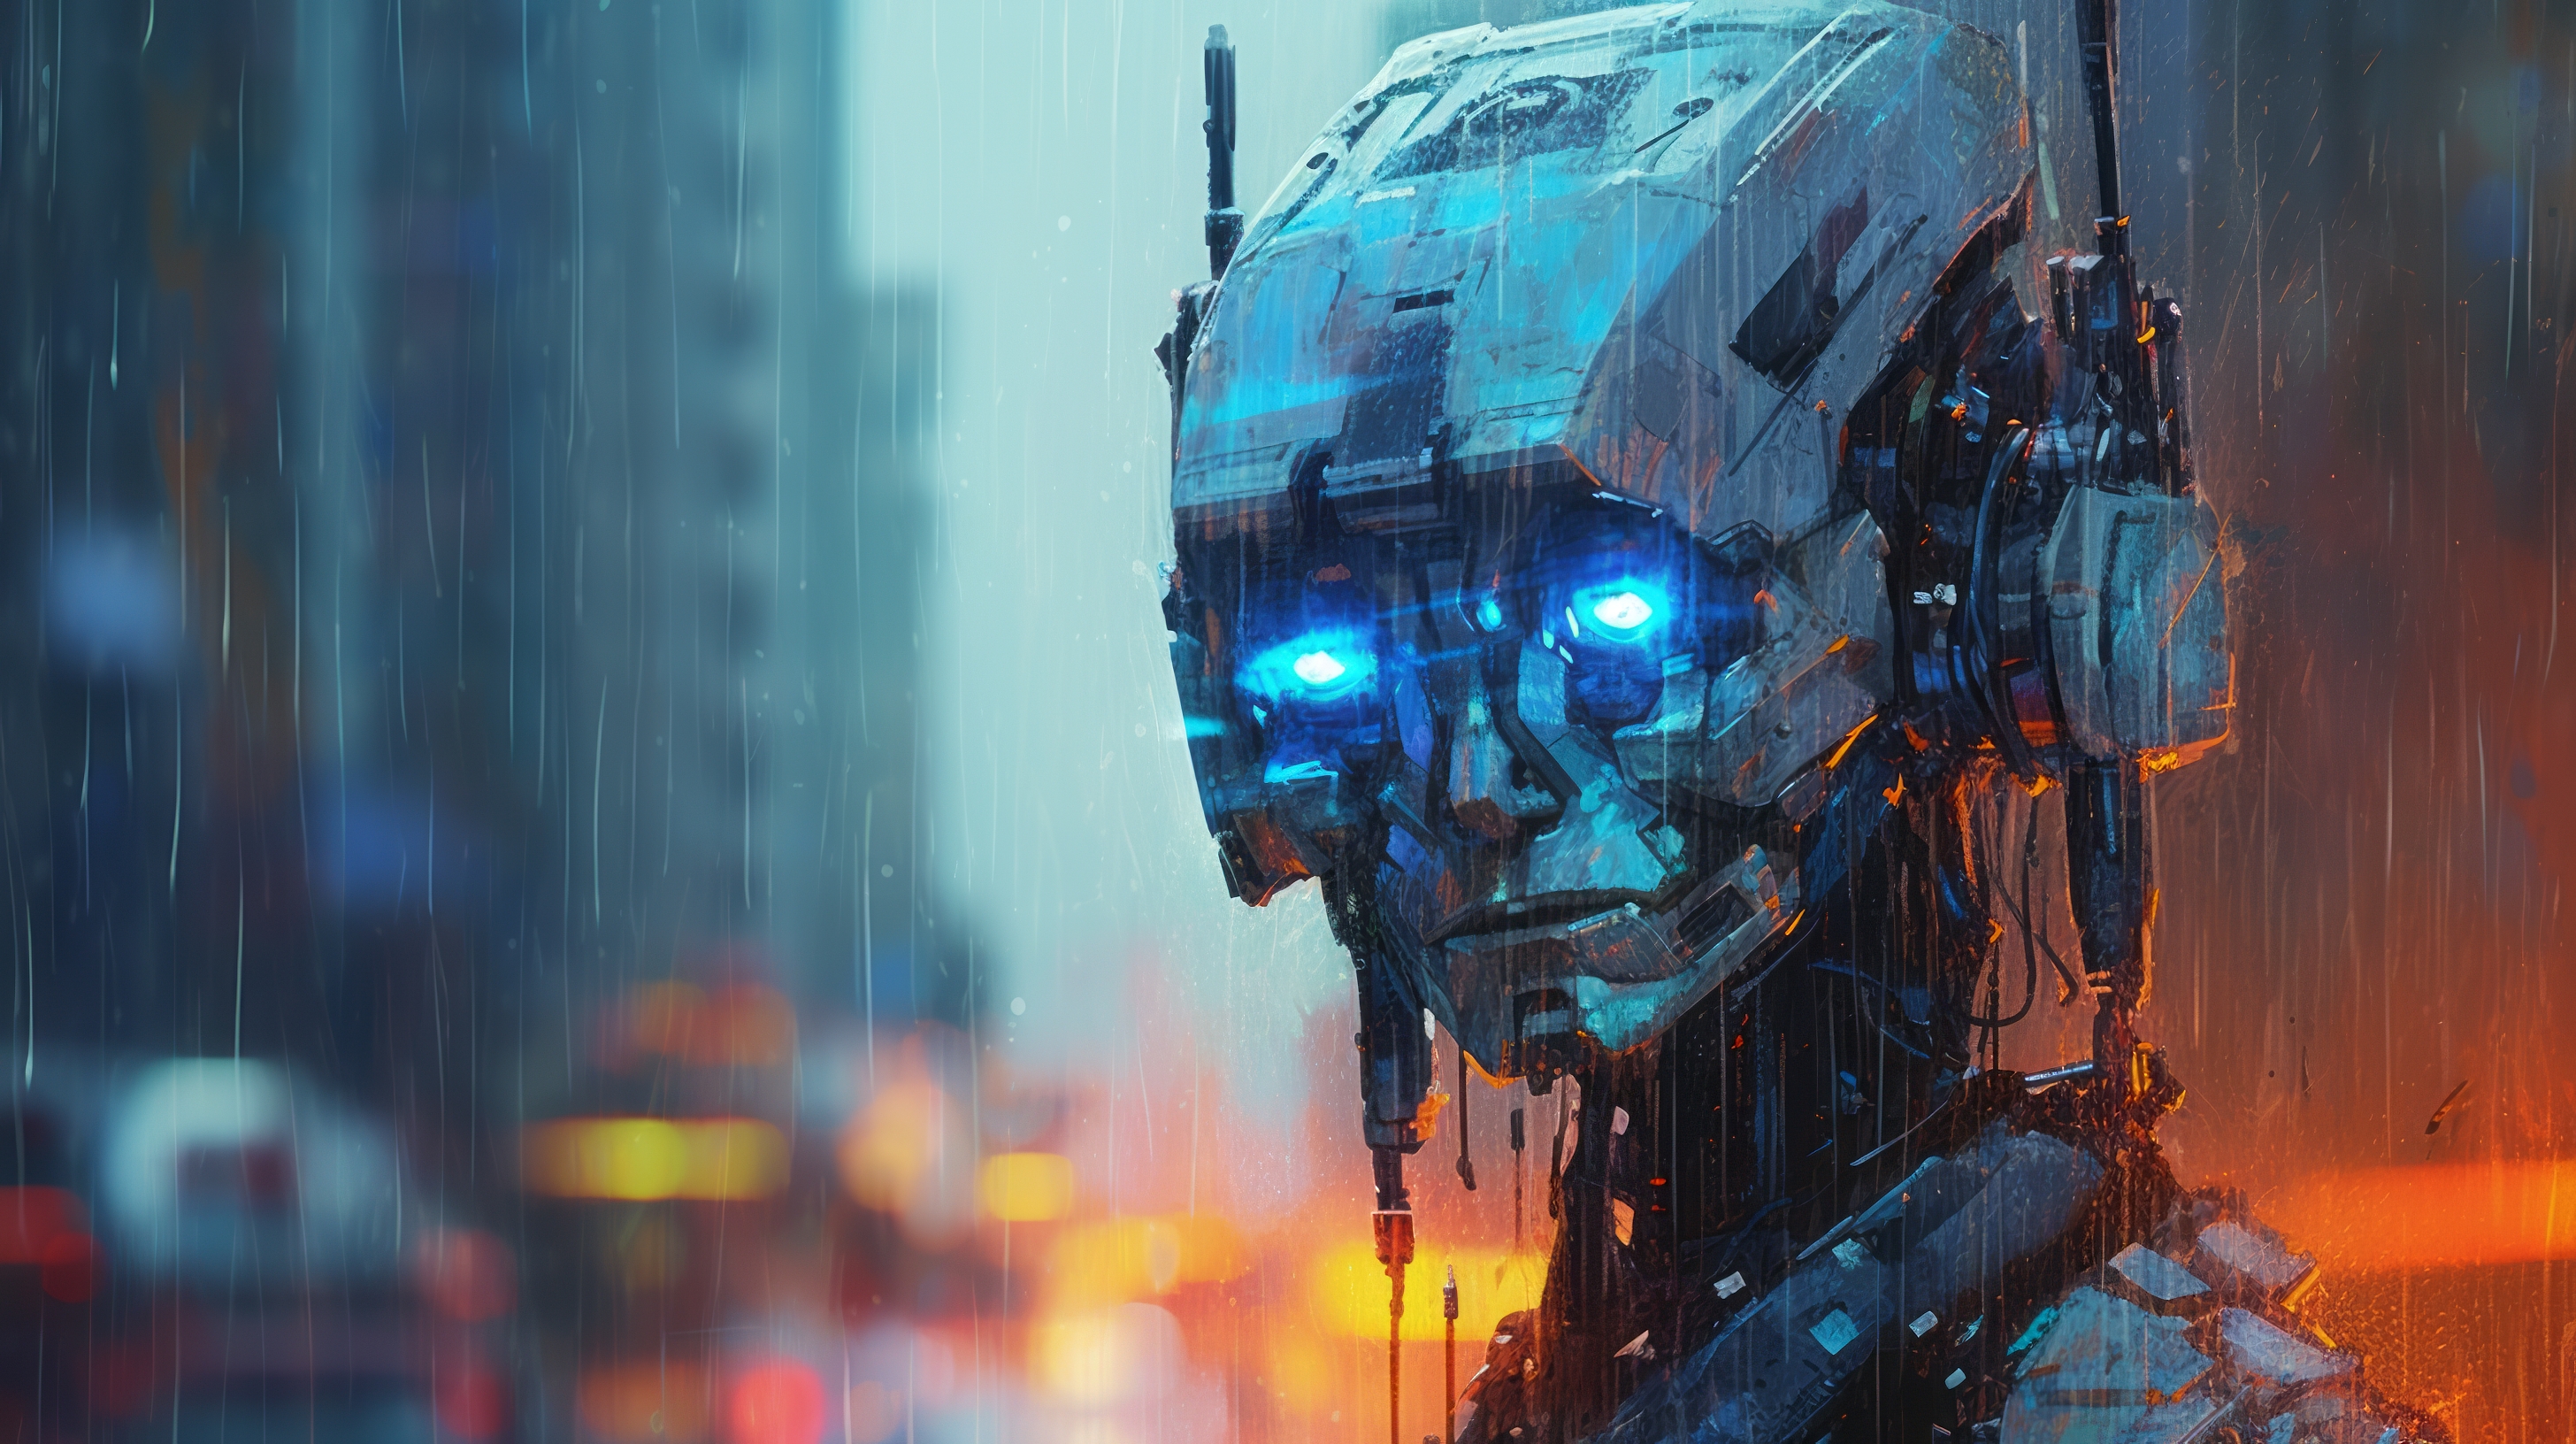 General 2912x1632 AI art illustration cyberpunk robot glowing eyes rain blurred blurry background